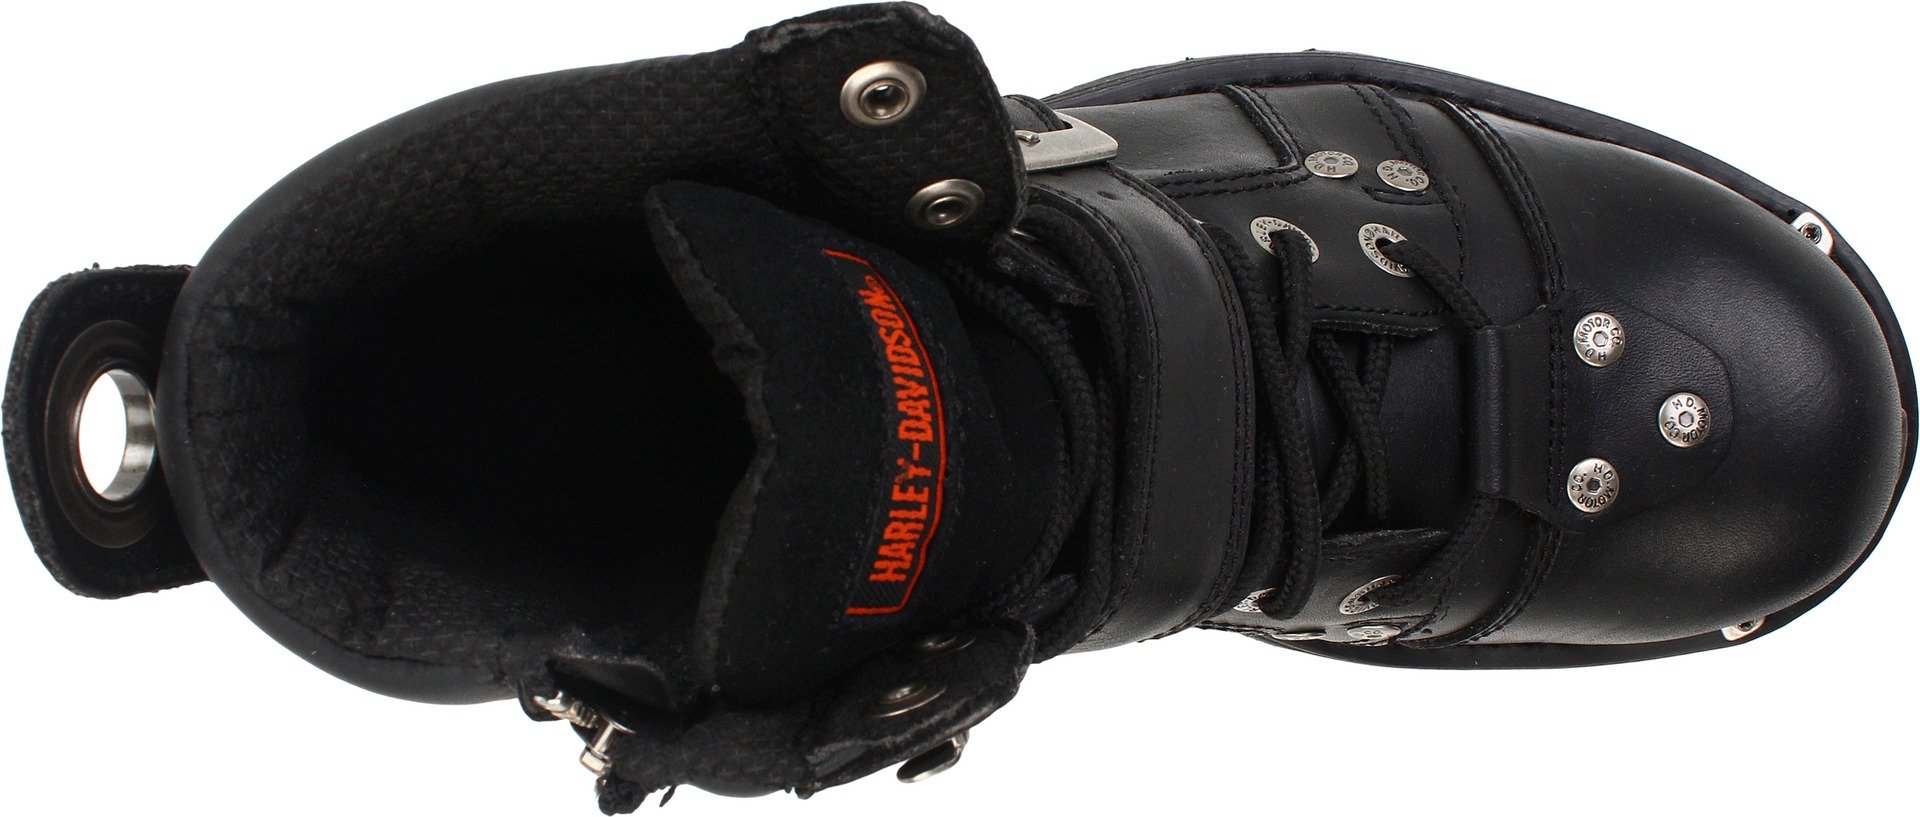 Harley-Davidson Men's Brake Buckle Boot